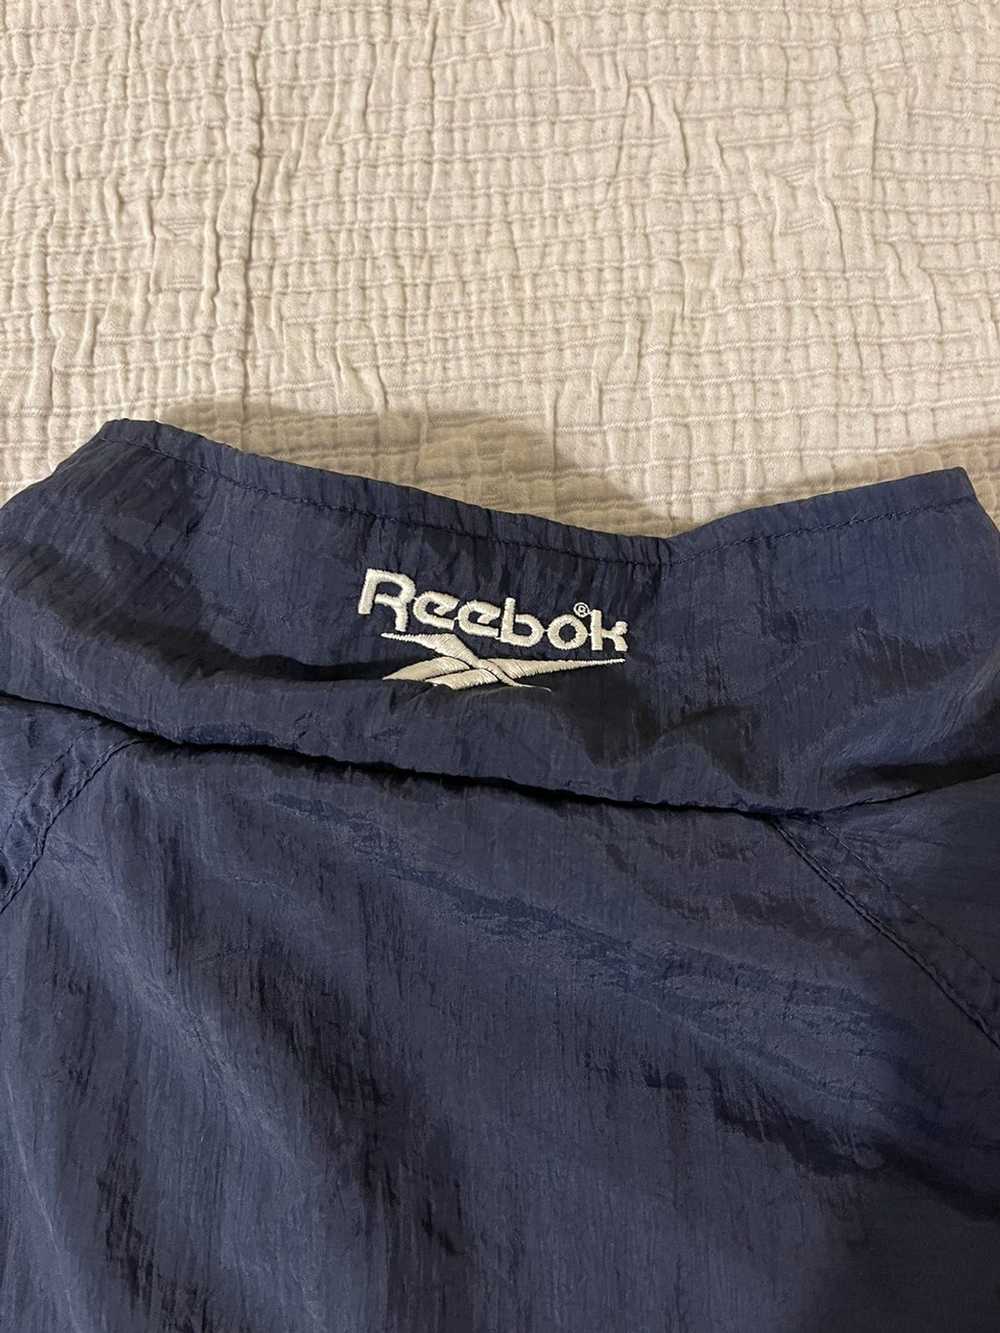 Reebok × Vintage Rare Vintage Reebok Jacket Size L - image 7